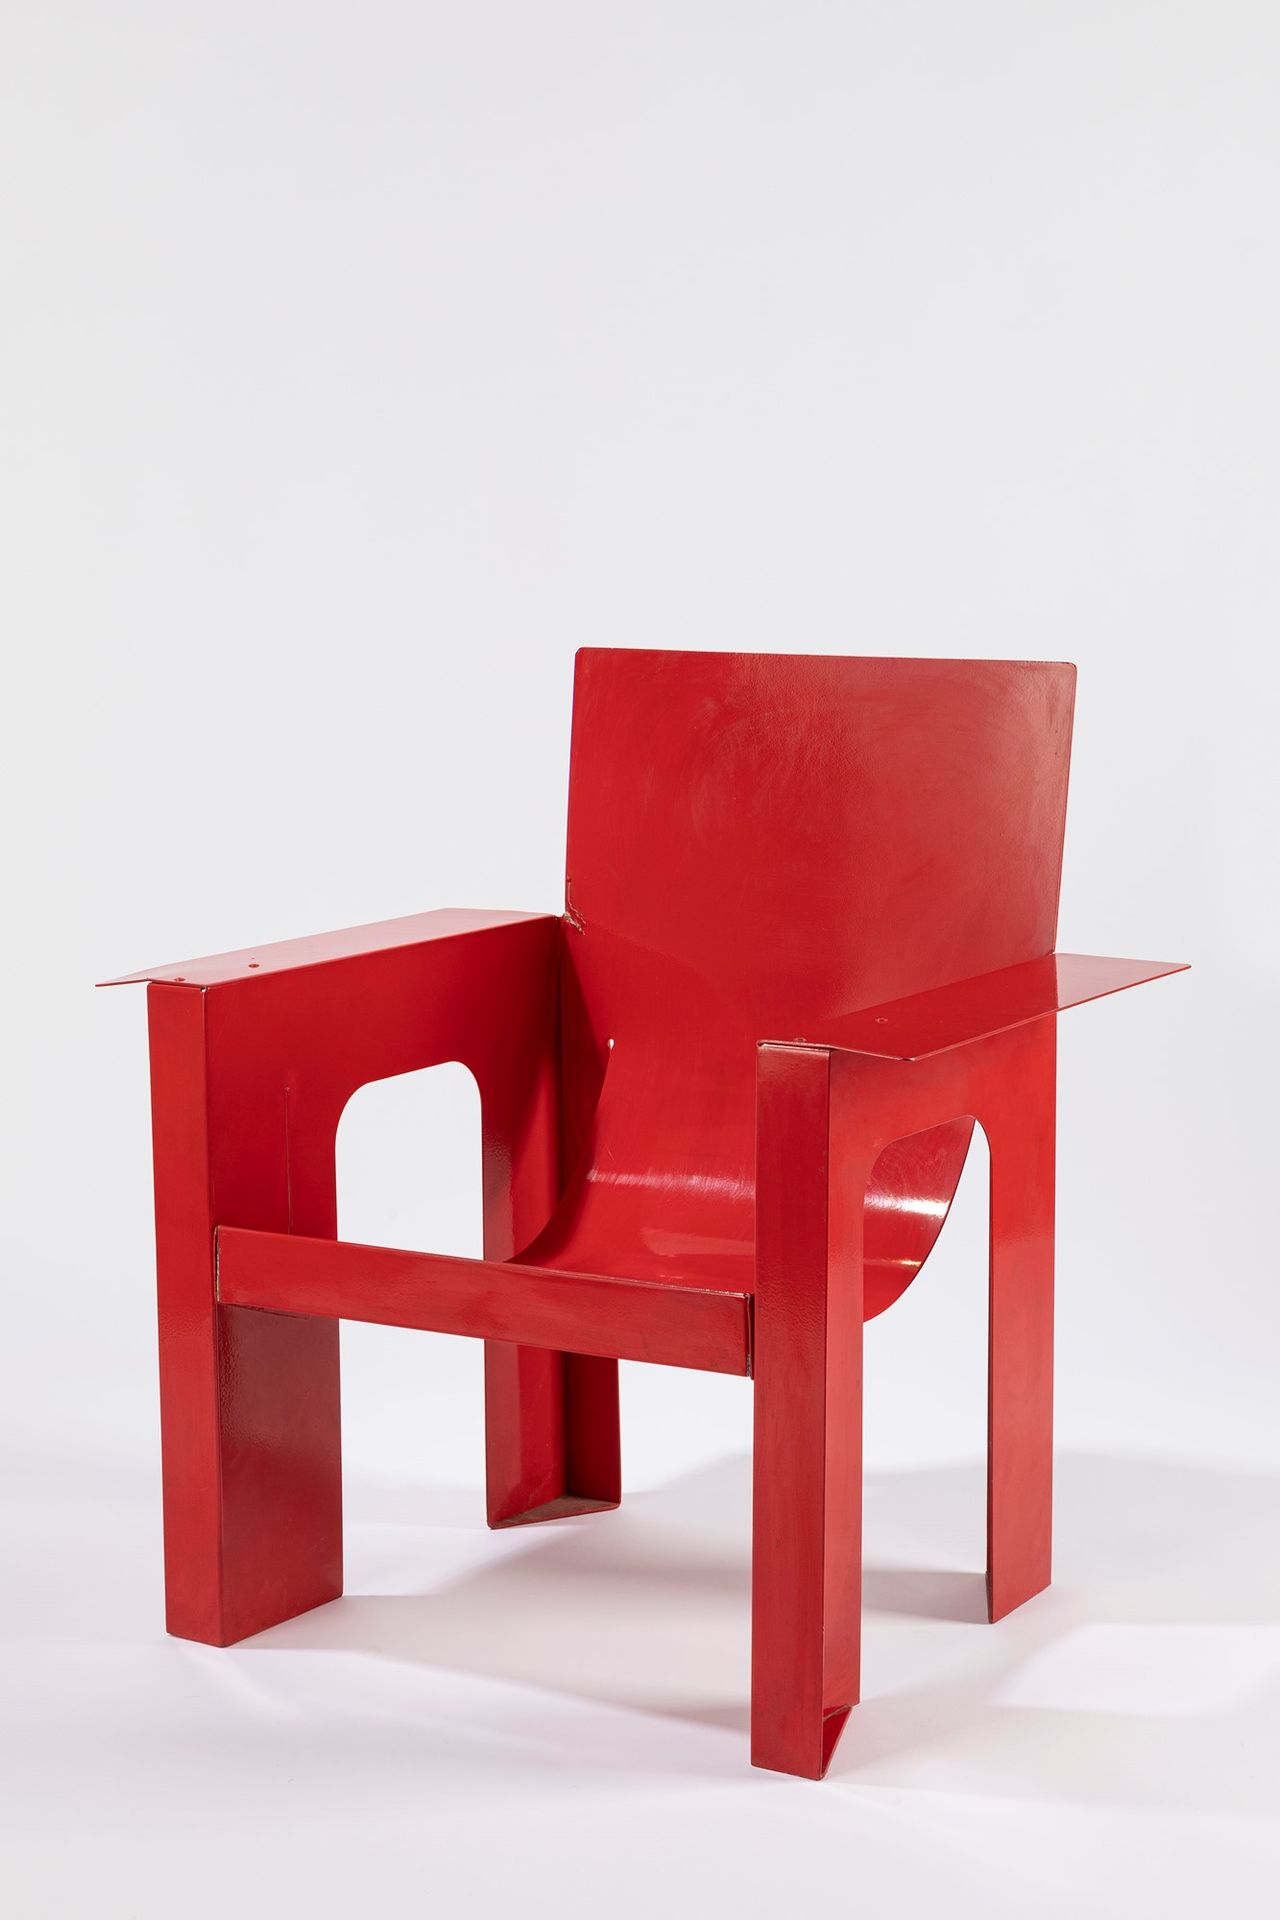 Giandomenico Belotti Rietveld, 1984

h 78 x 72,5 x 48
red varnished metal chair.&hellip;